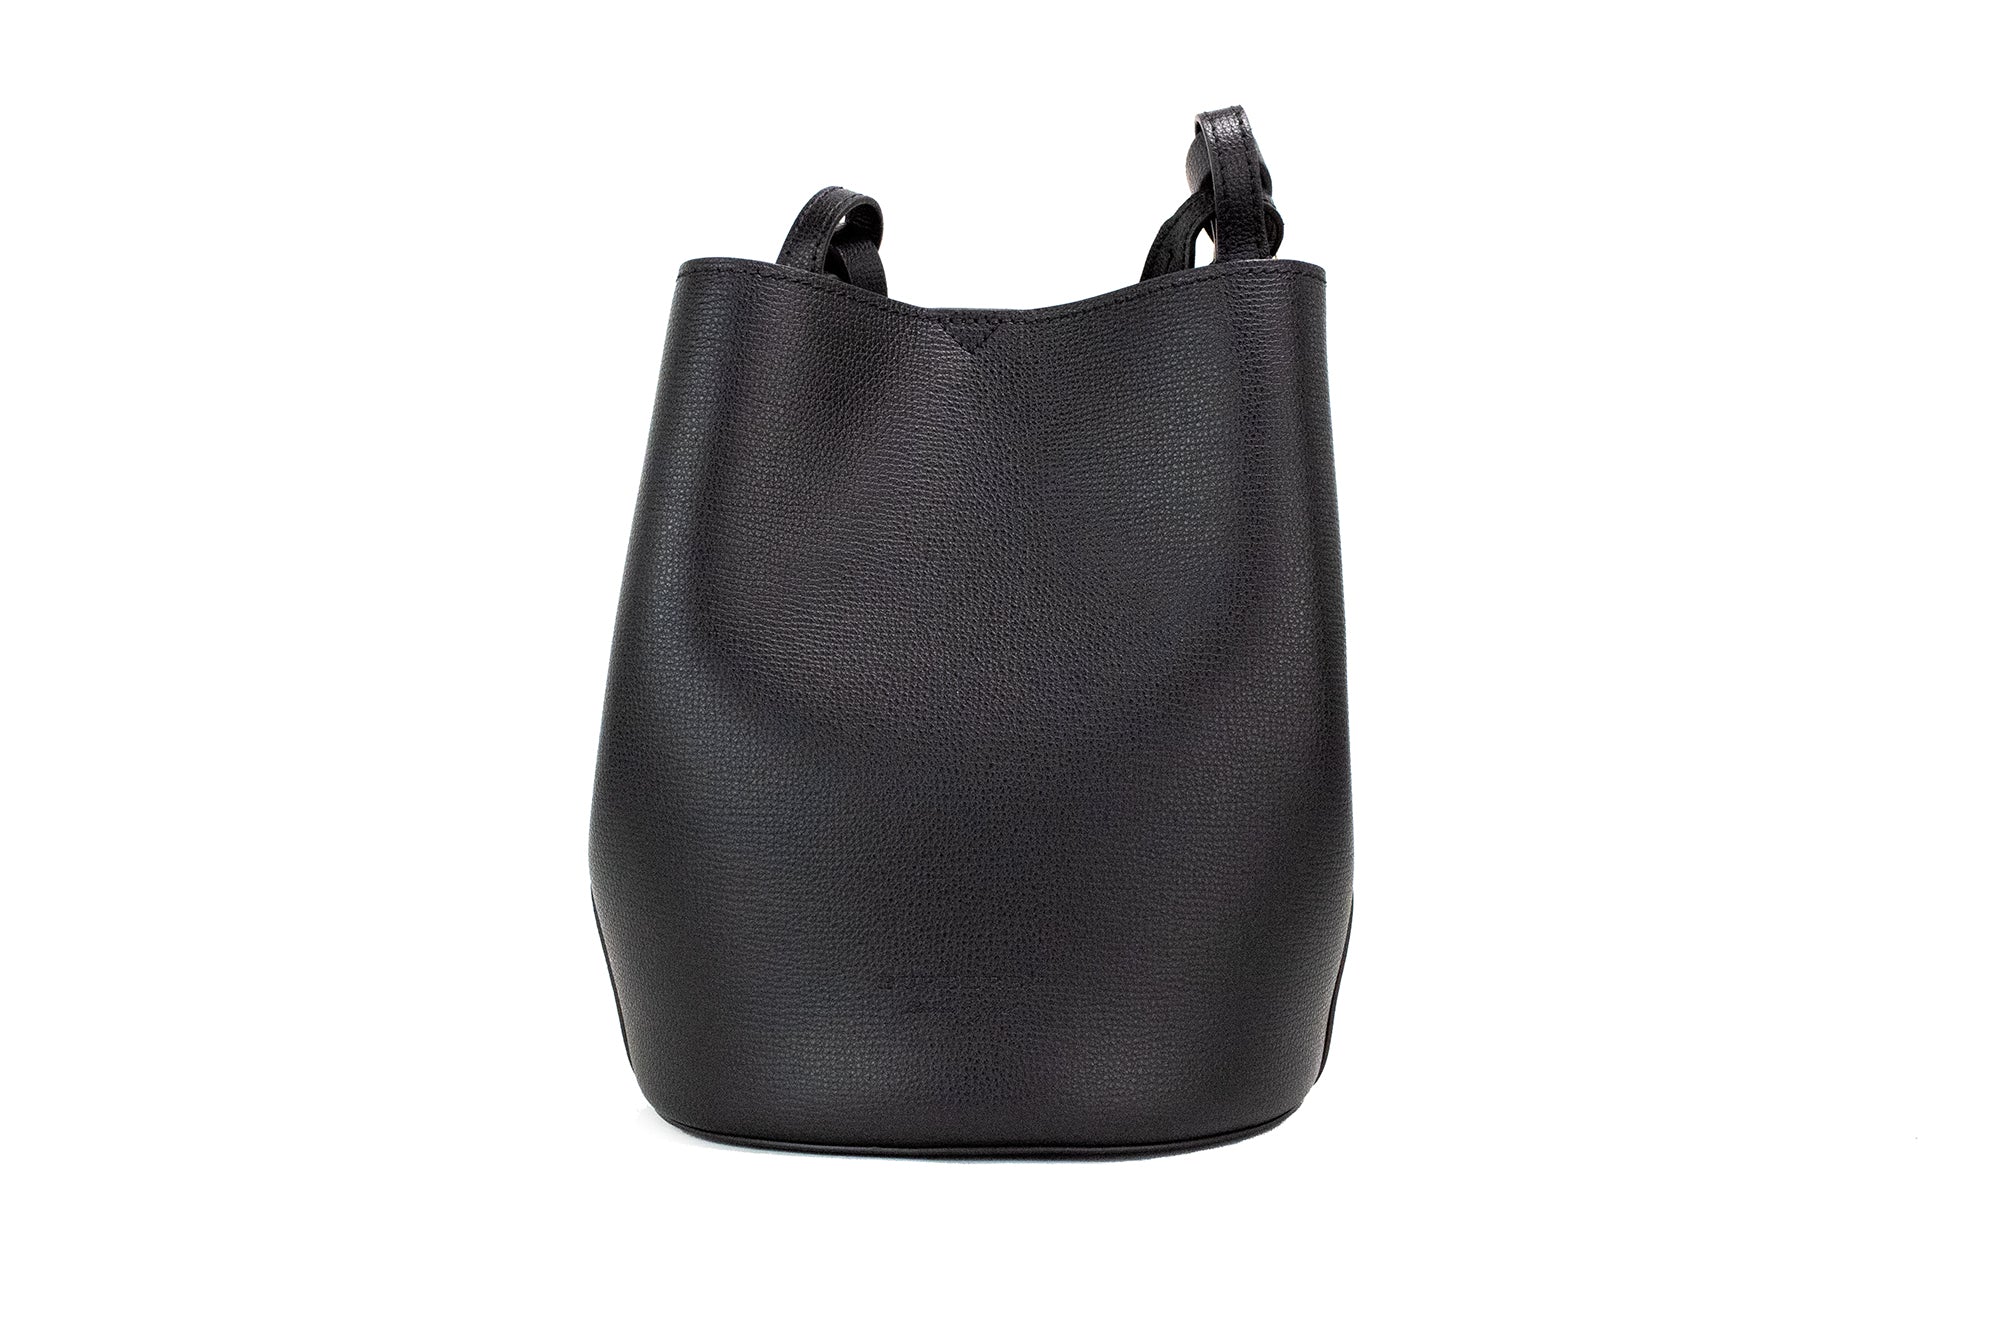 Lorne Small Black Haymarket Check Pebble Leather Bucket Handbag Purse - Divitiae Glamour